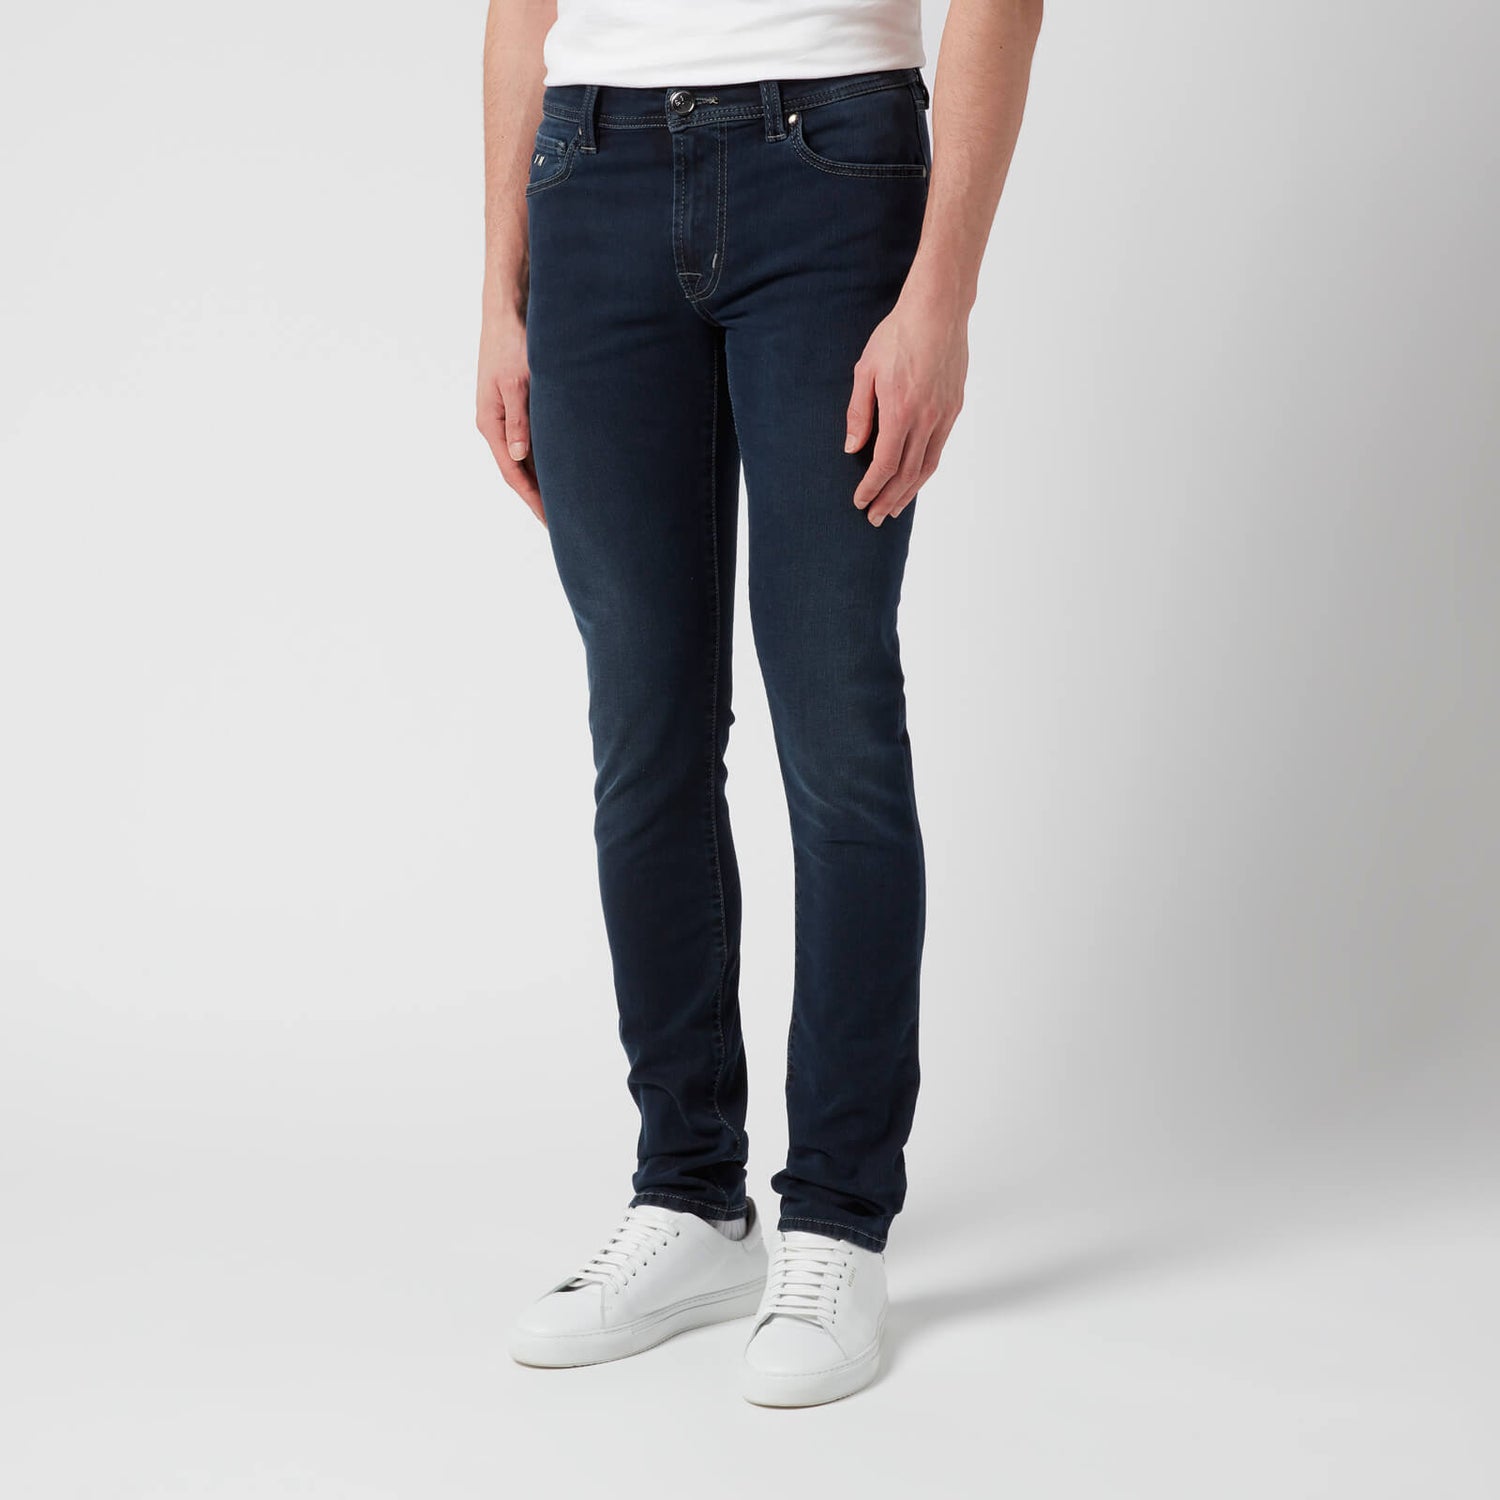 Tramarossa Men's Leonardo Slim Denim Jeans - Wash 4 - W32